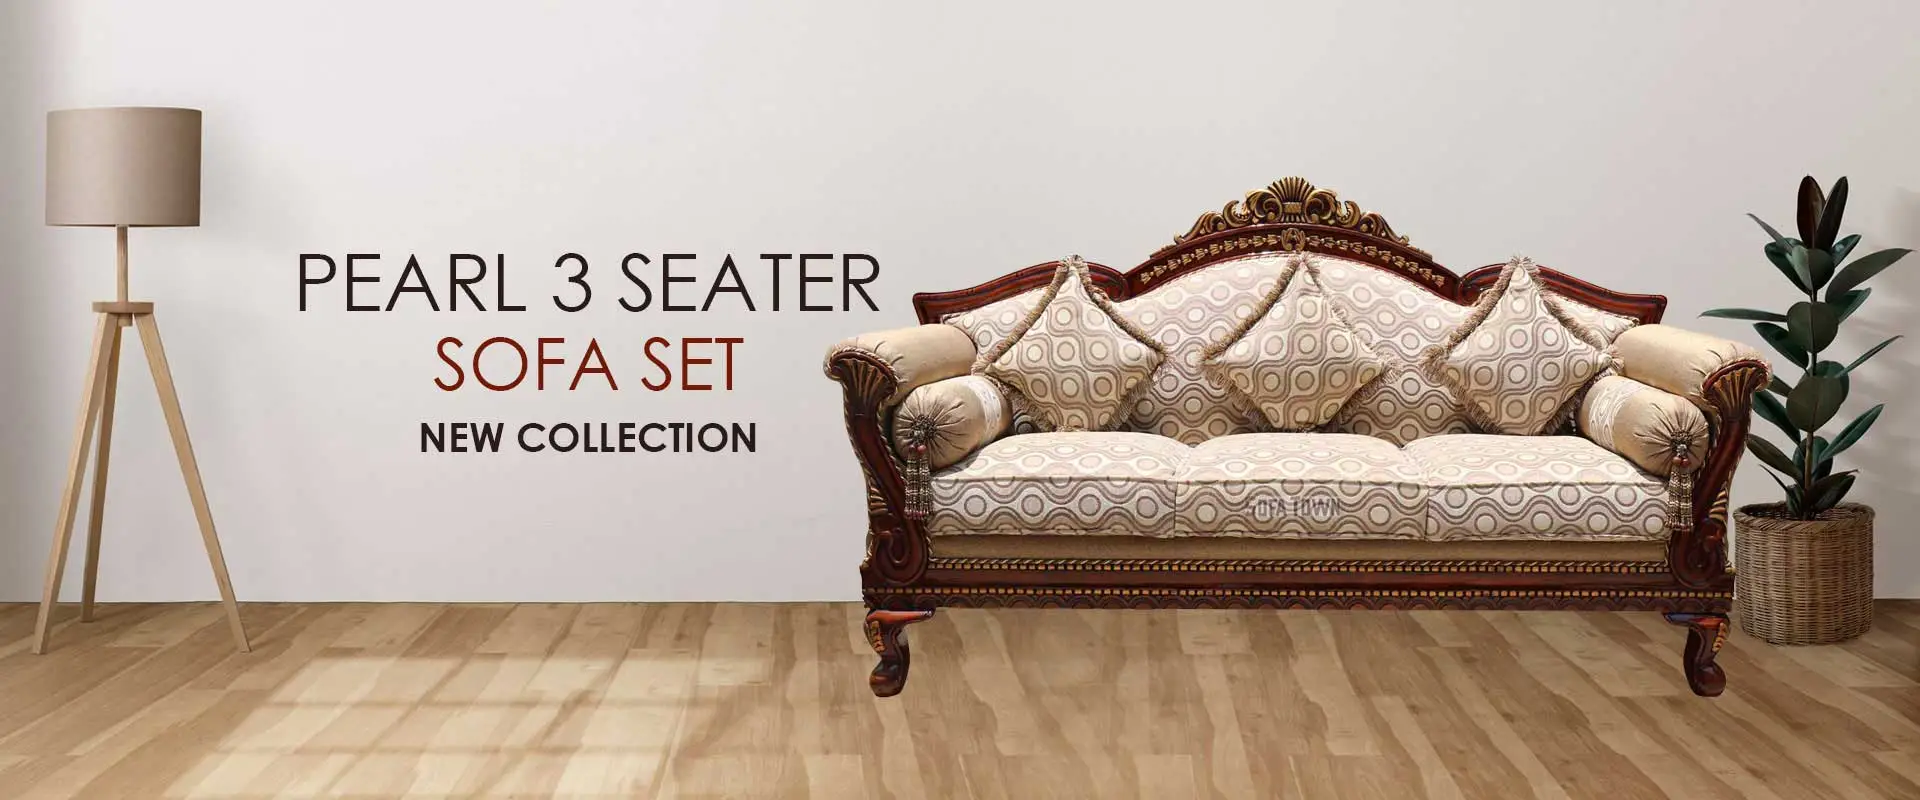 Pearl 3 Seater Sofa Set  Manufacturers in Balangir